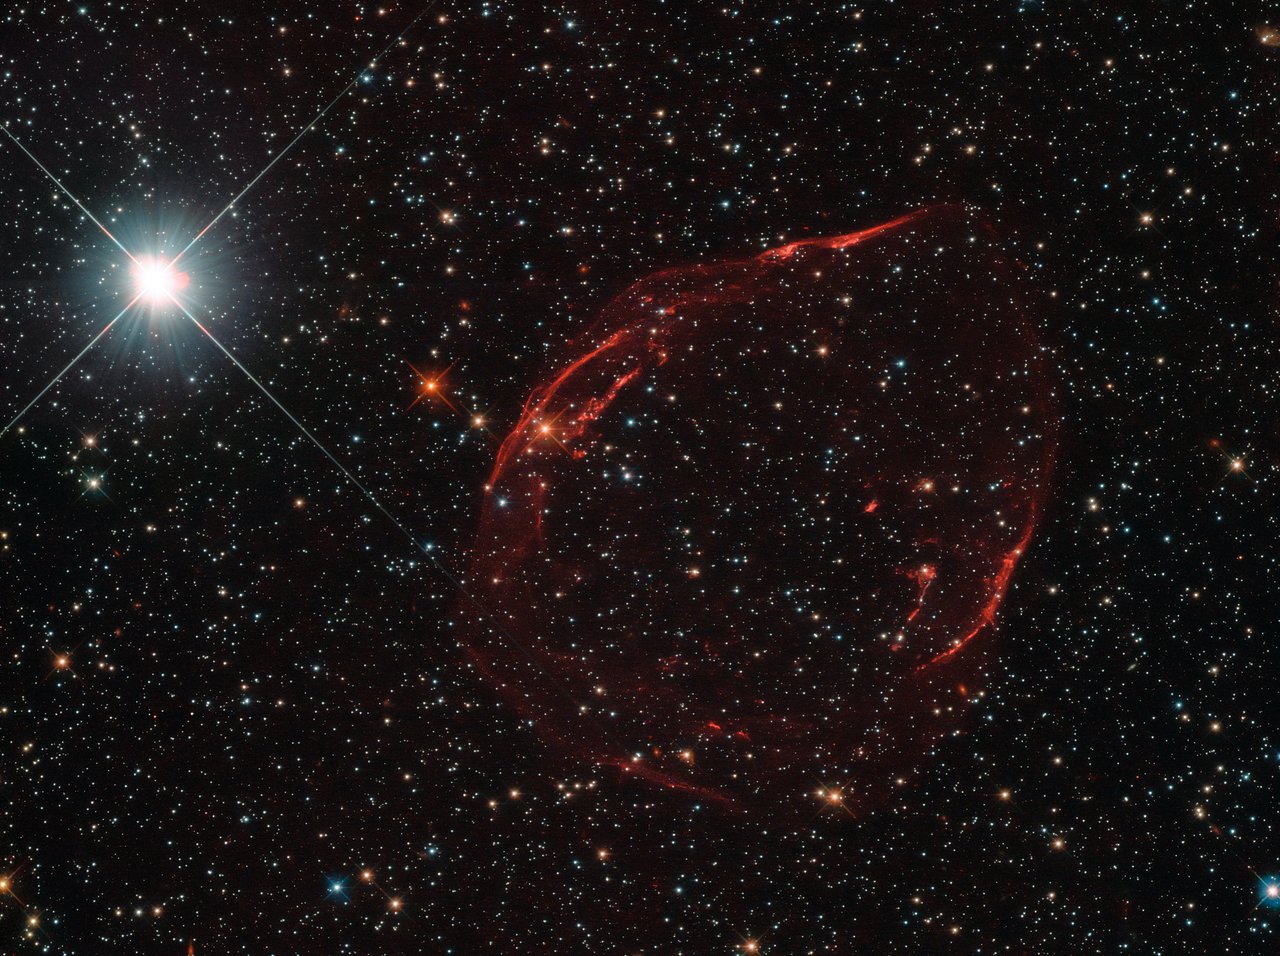 Stellar shrapnel